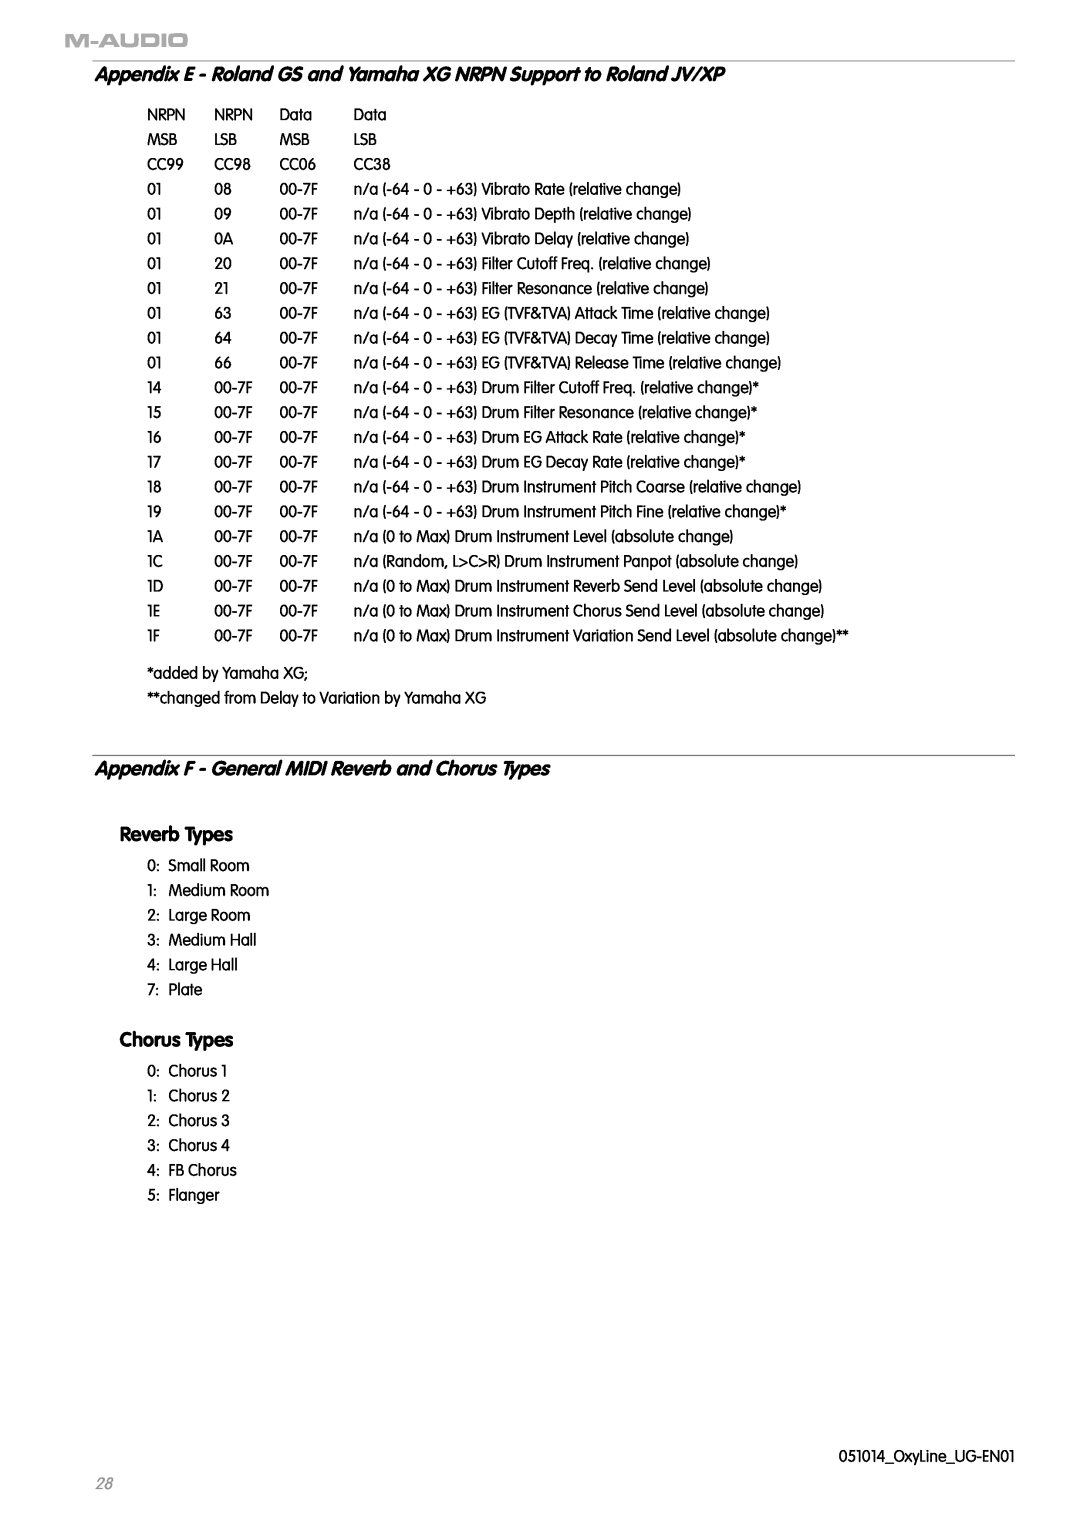 M-Audio OXYGEN 8 V2 manual Appendix F - General MIDI Reverb and Chorus Types, Reverb Types 